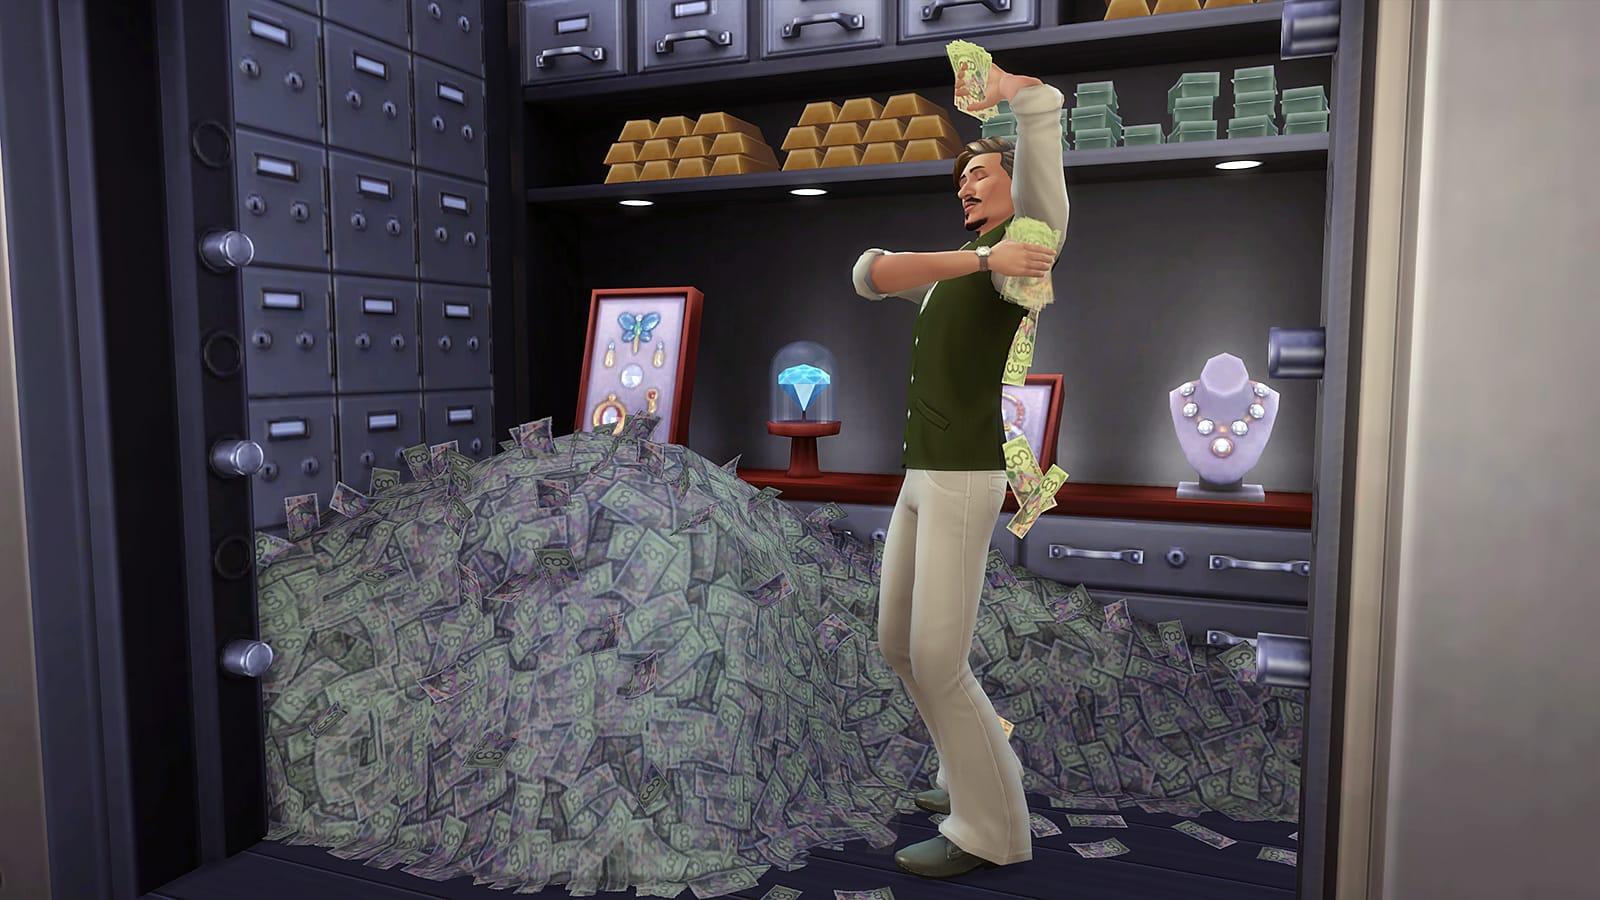 A money vault with a Sim